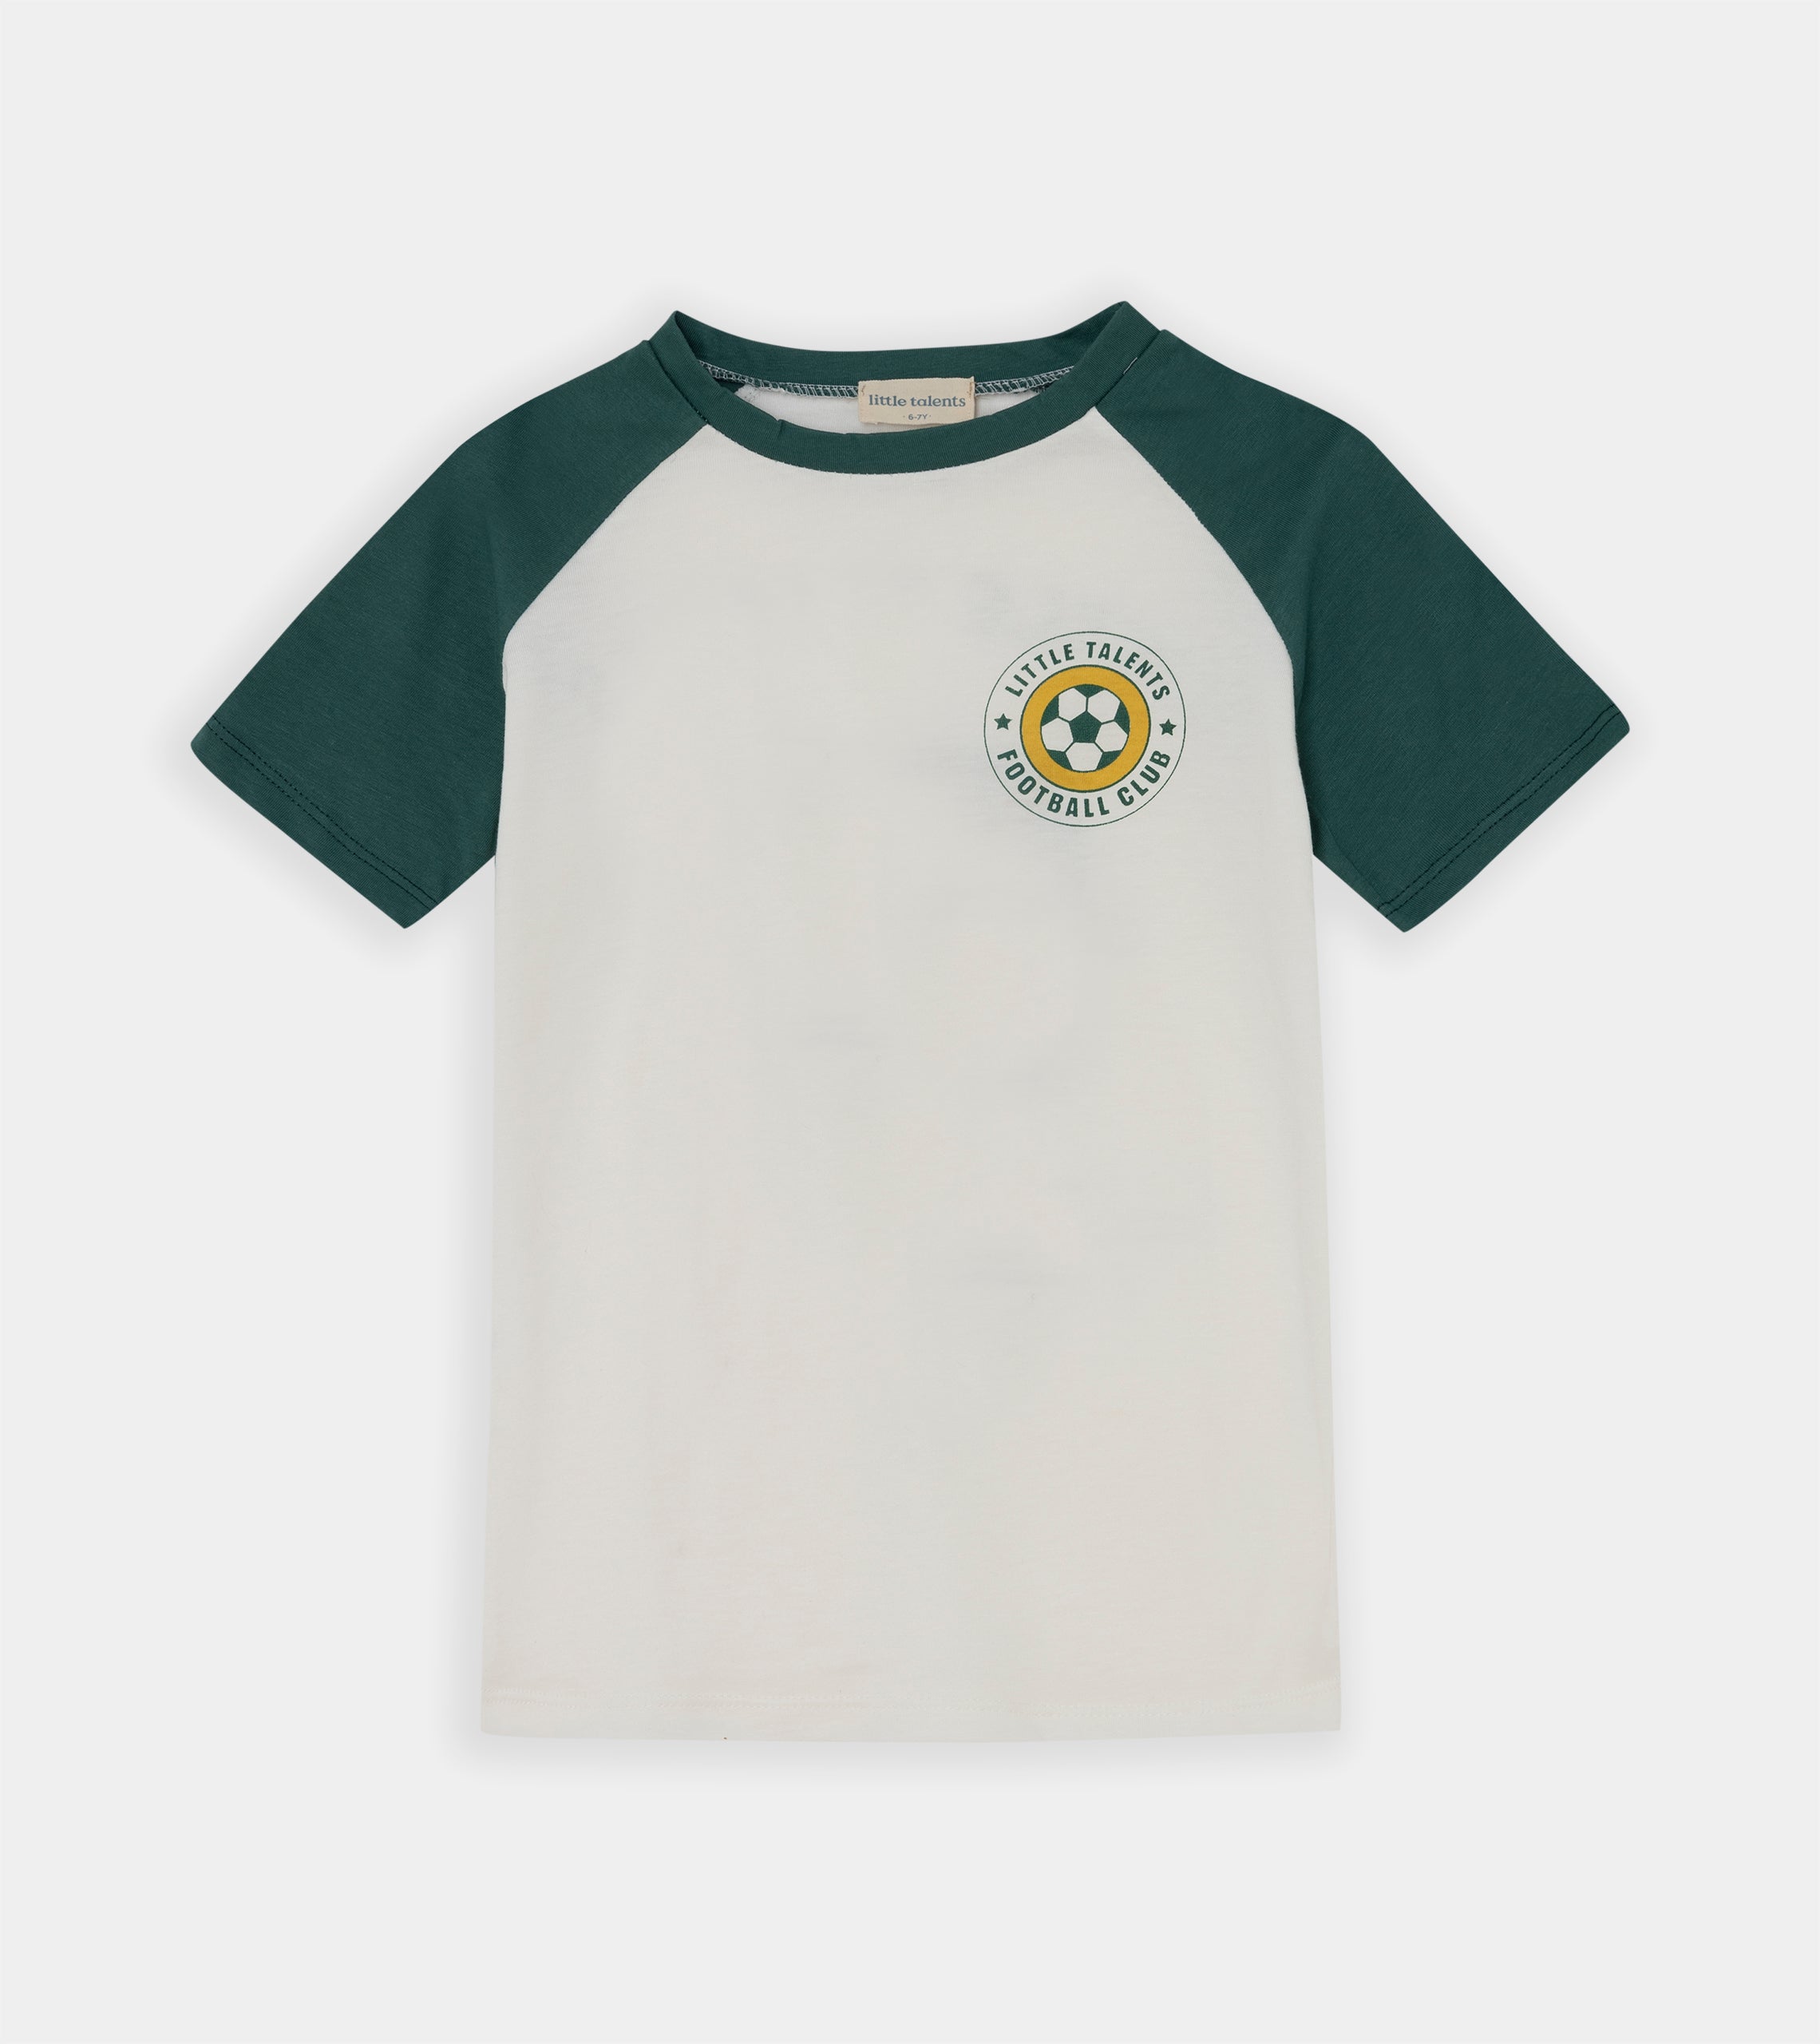 Green LT Football Club T-shirt